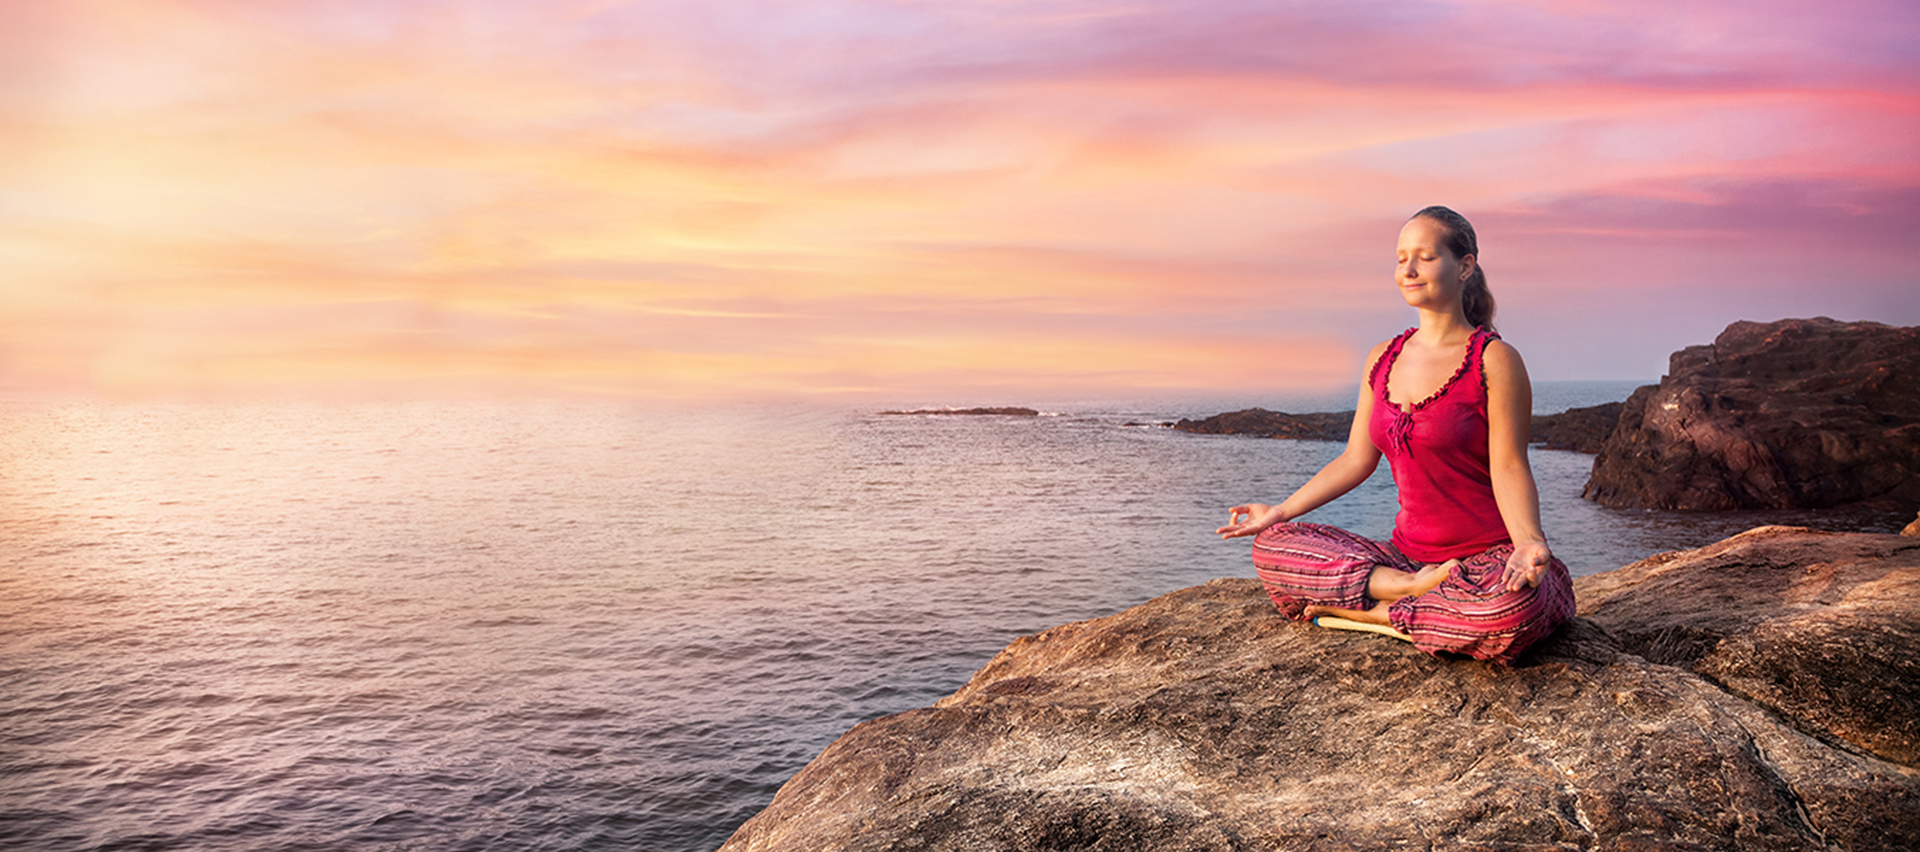 Reiki Healing and Yoga Classes for Self Awakening by Reiki Practitioner in Thunder Bay